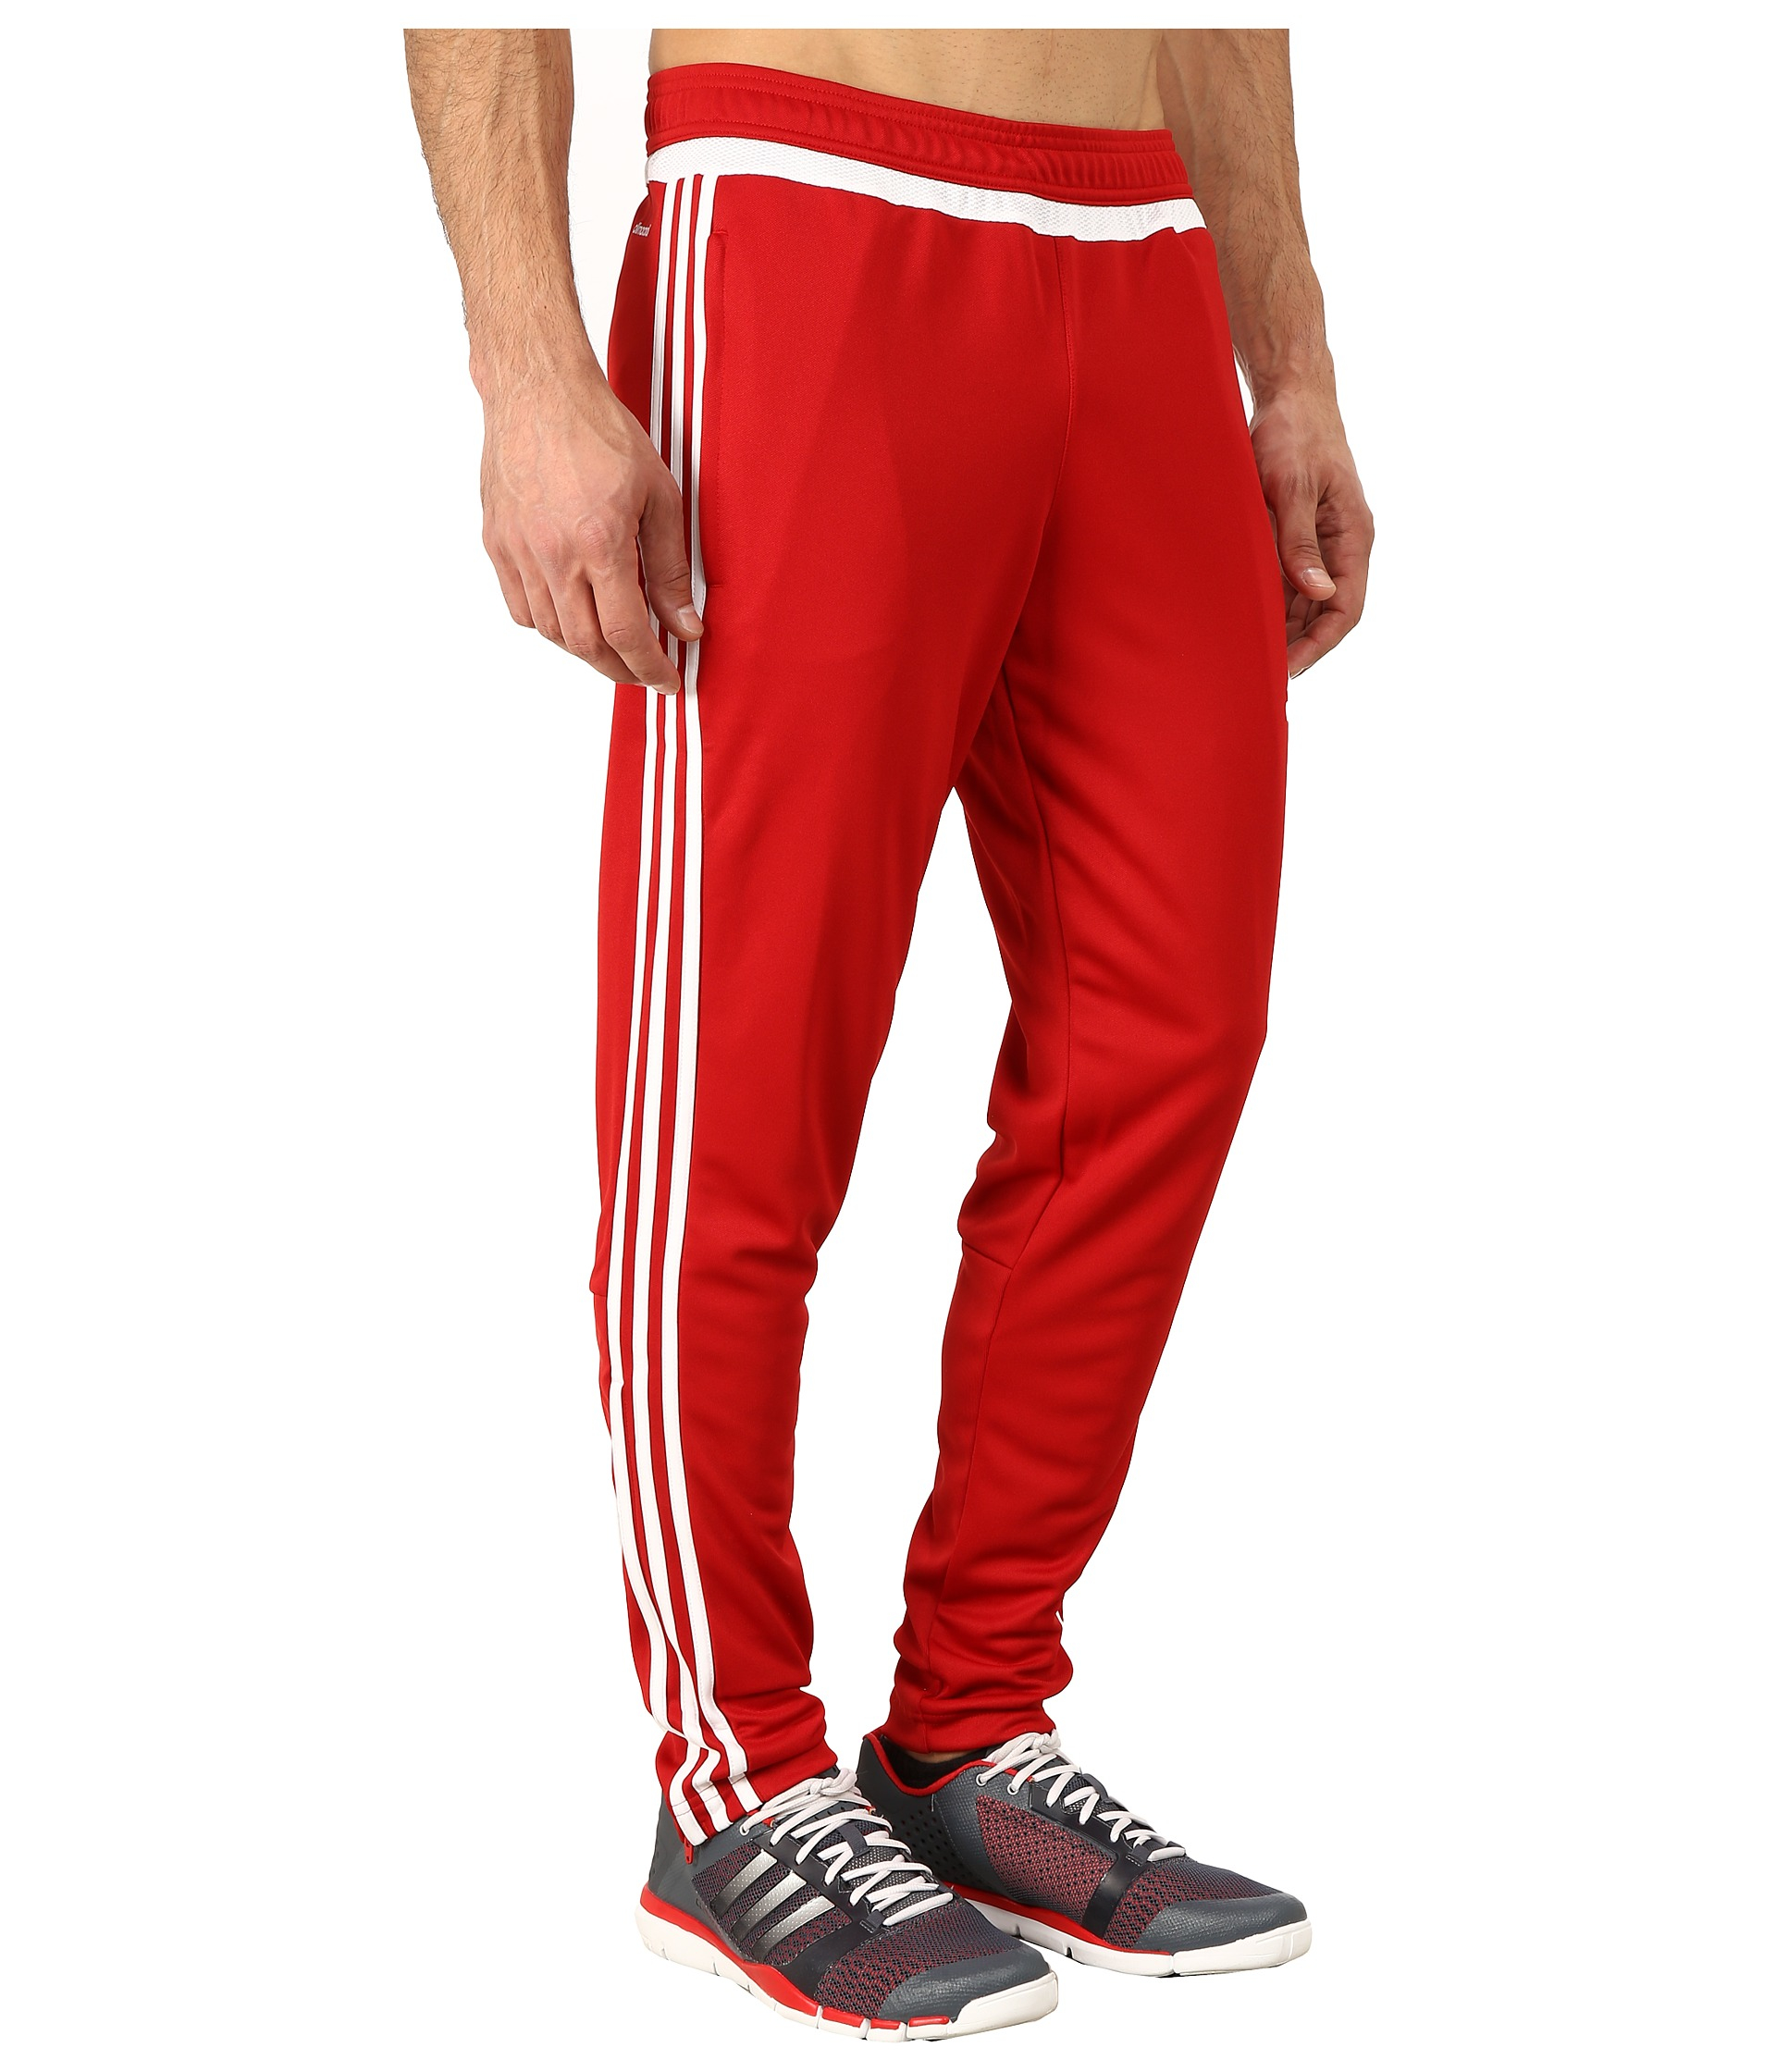 adidas condivo red pants